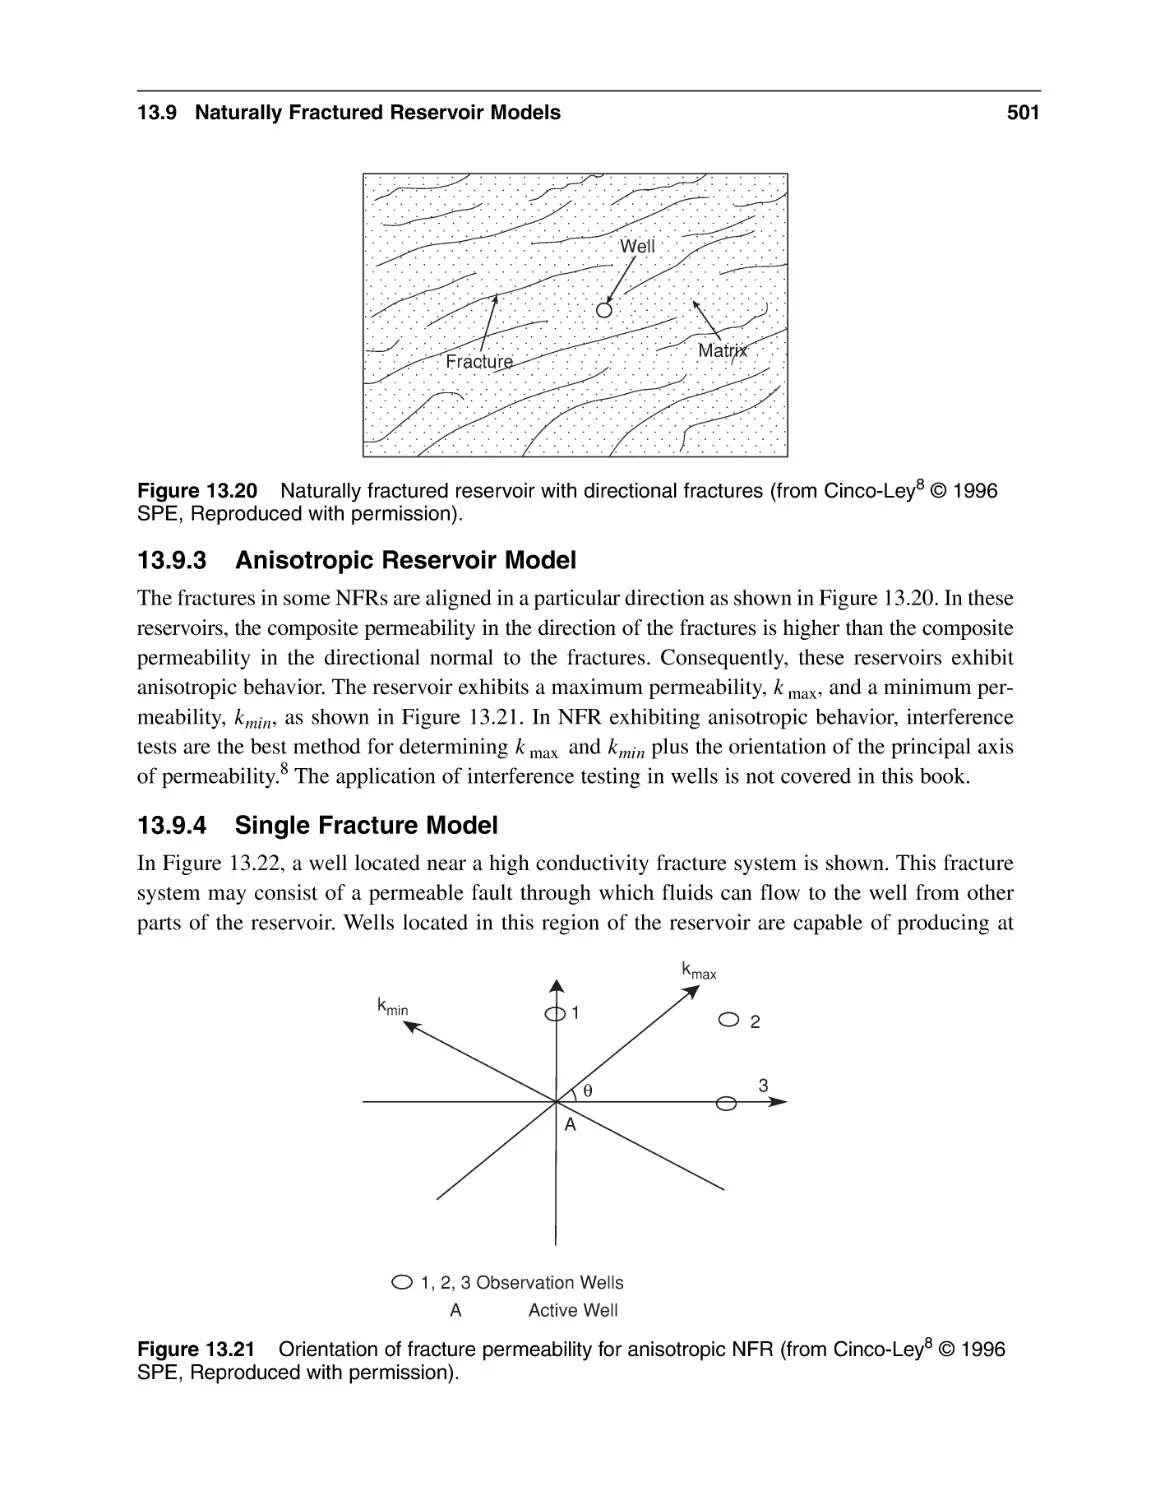 13.9.3 Anisotropic Reservoir Model
13.9.4 Single Fracture Model